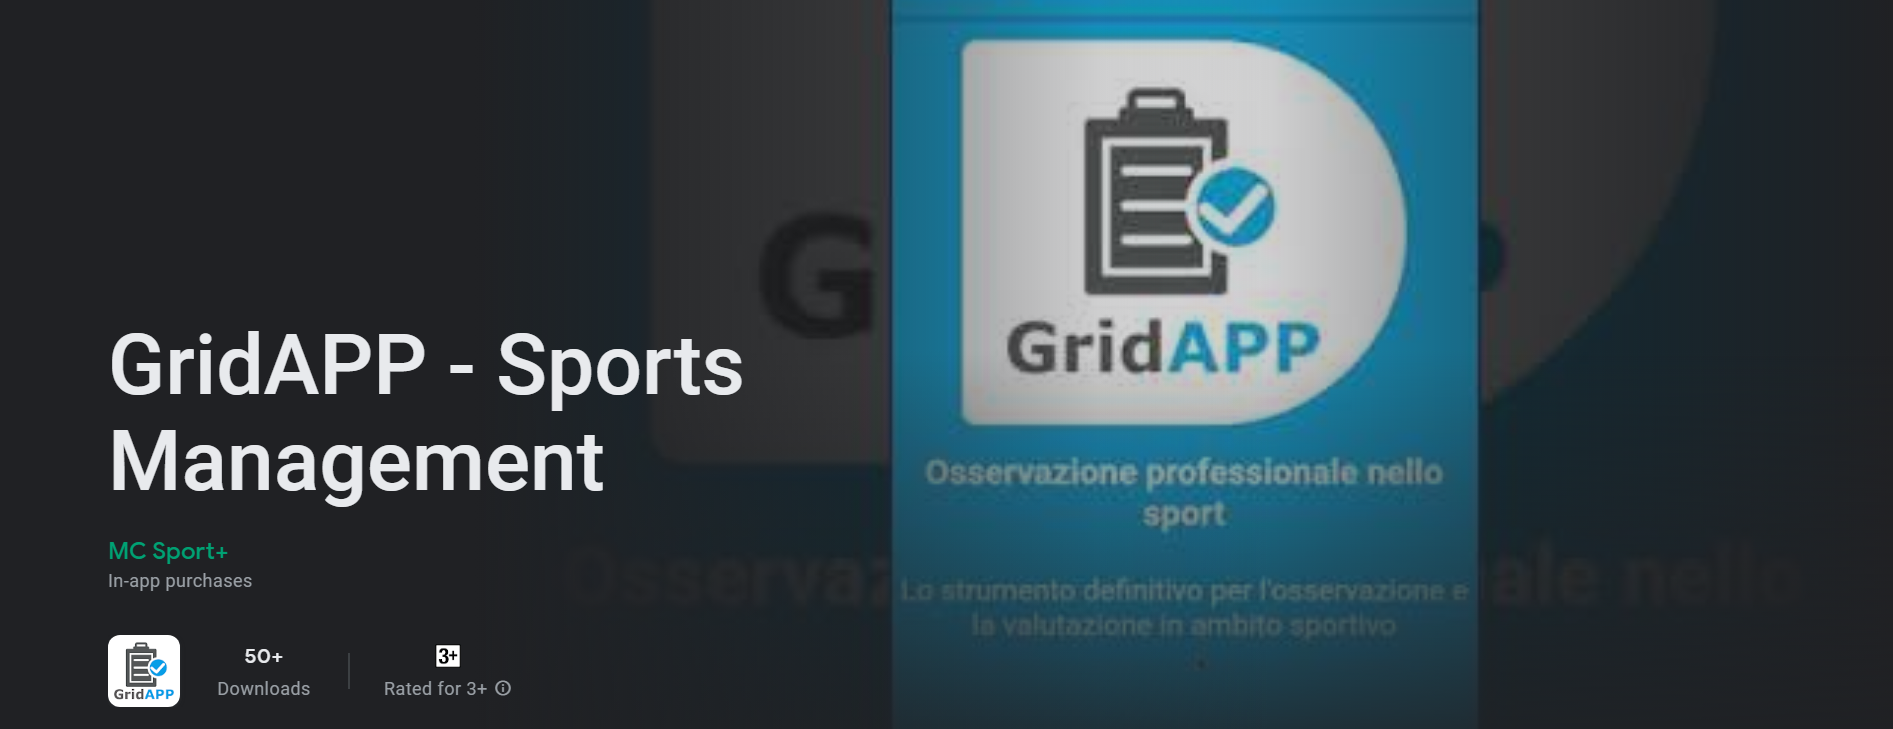 GridAPP - Sports Management